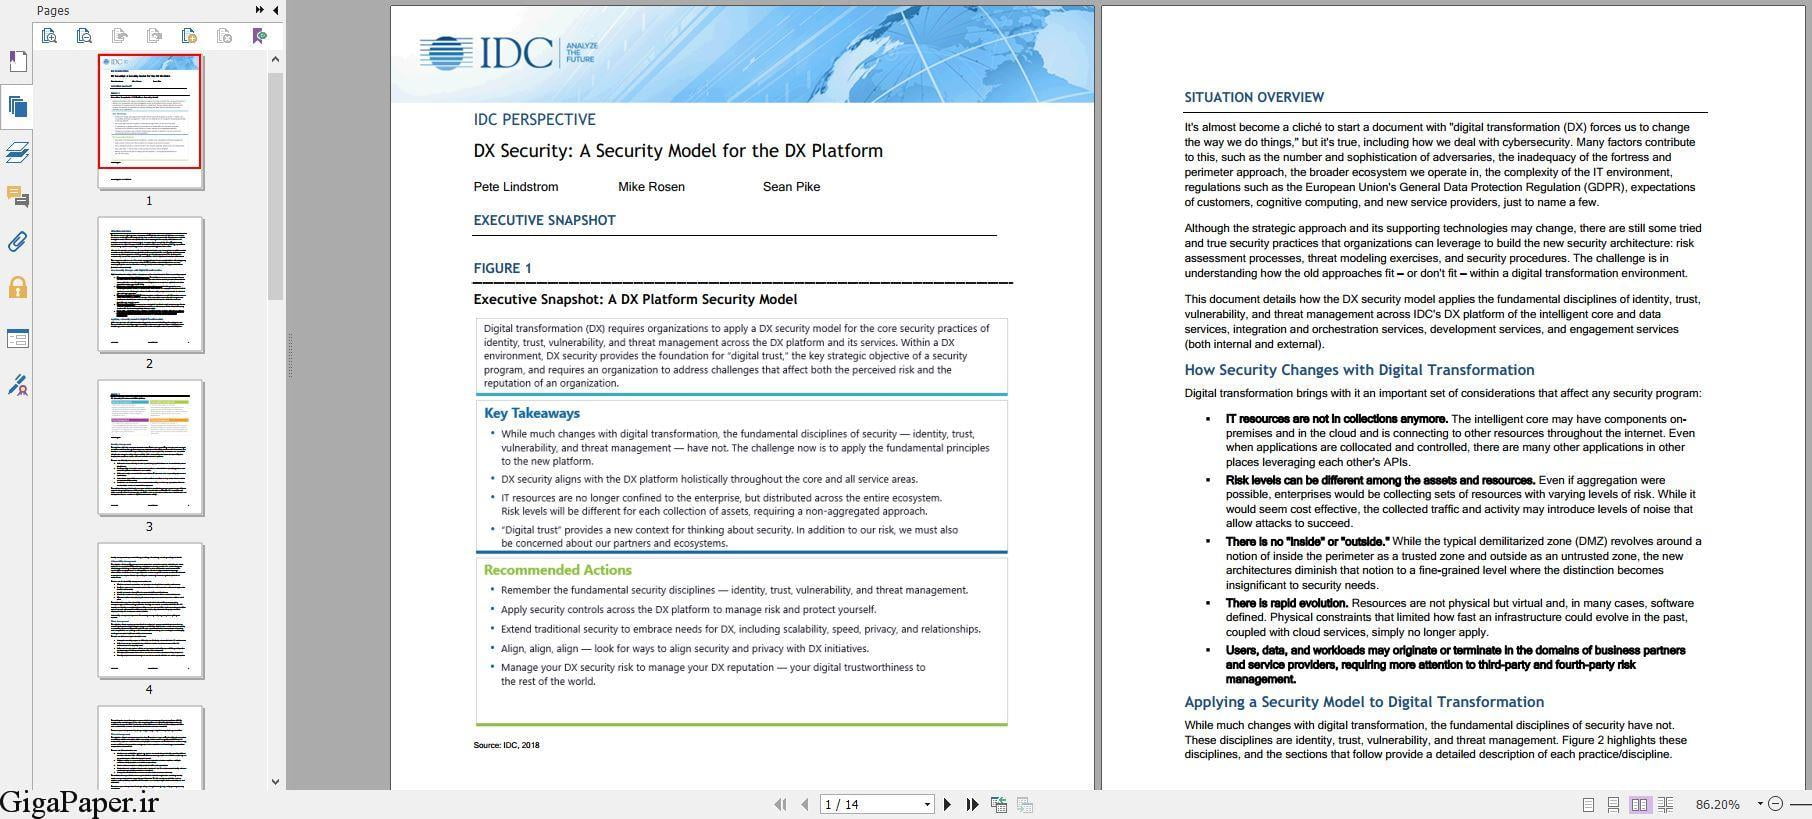 خرید گزارش DX Security: A Security Model for the DX Platform دانلود گزارش IDC تهیه جديدترين گزارشهای IDC در کلیه زمینه ها گیگاپیپر